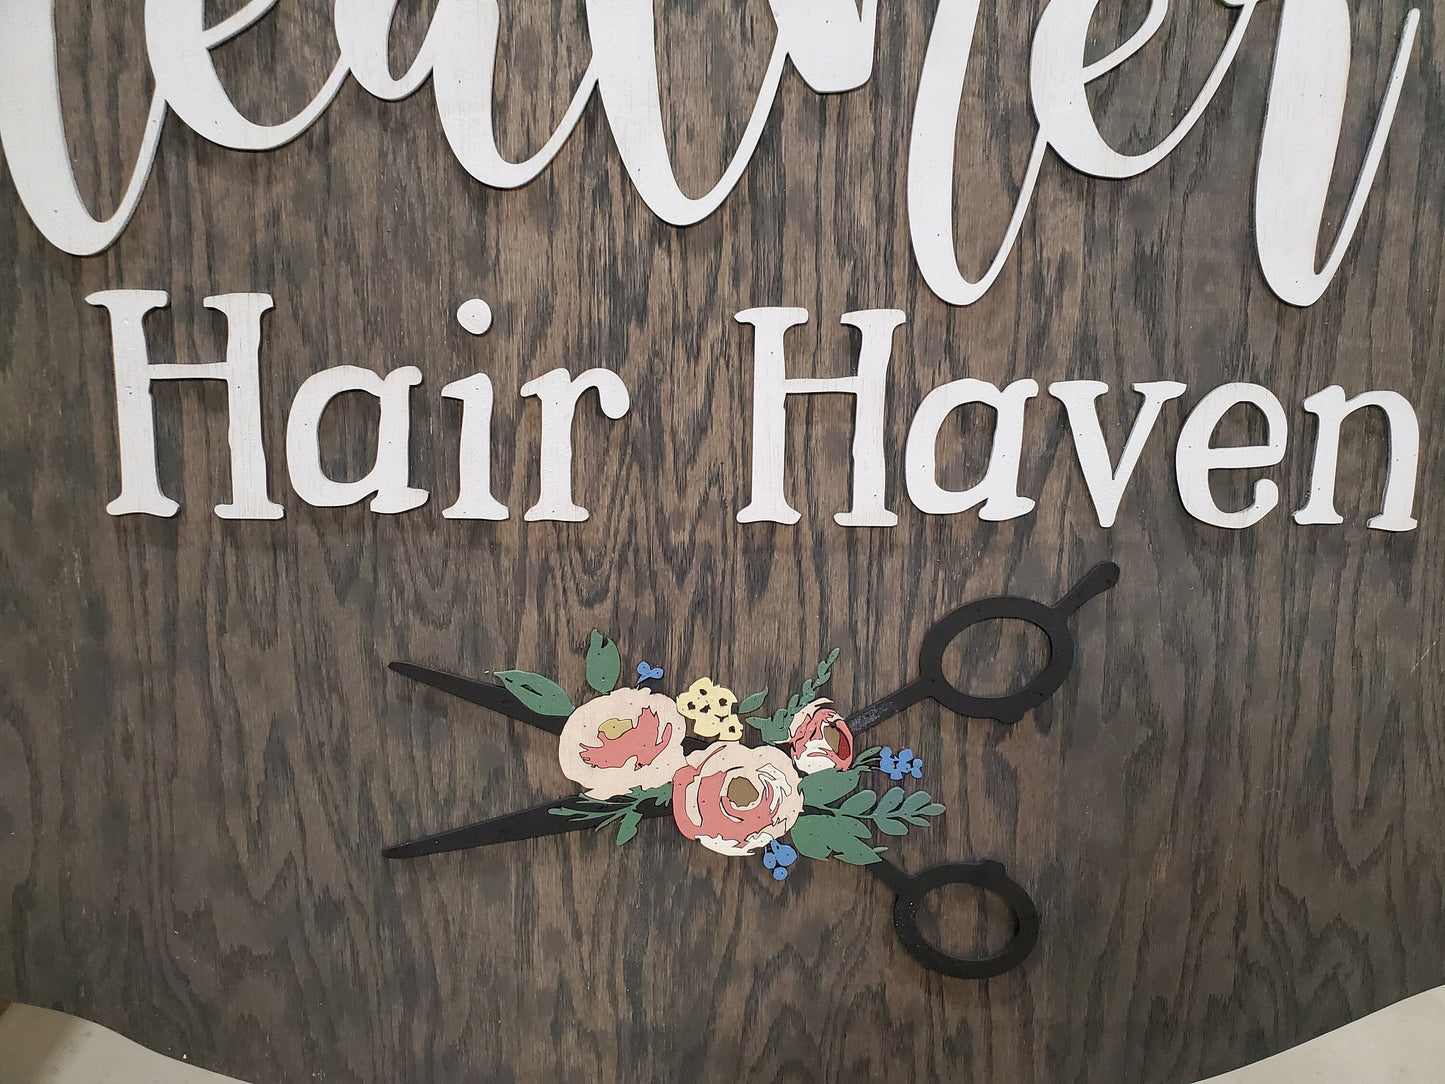 Salon Scissors Flowers Floral Shop Store Hair Dresser Beautician Business Sign Address Established Sign Exterior Outdoor Wooden Wood